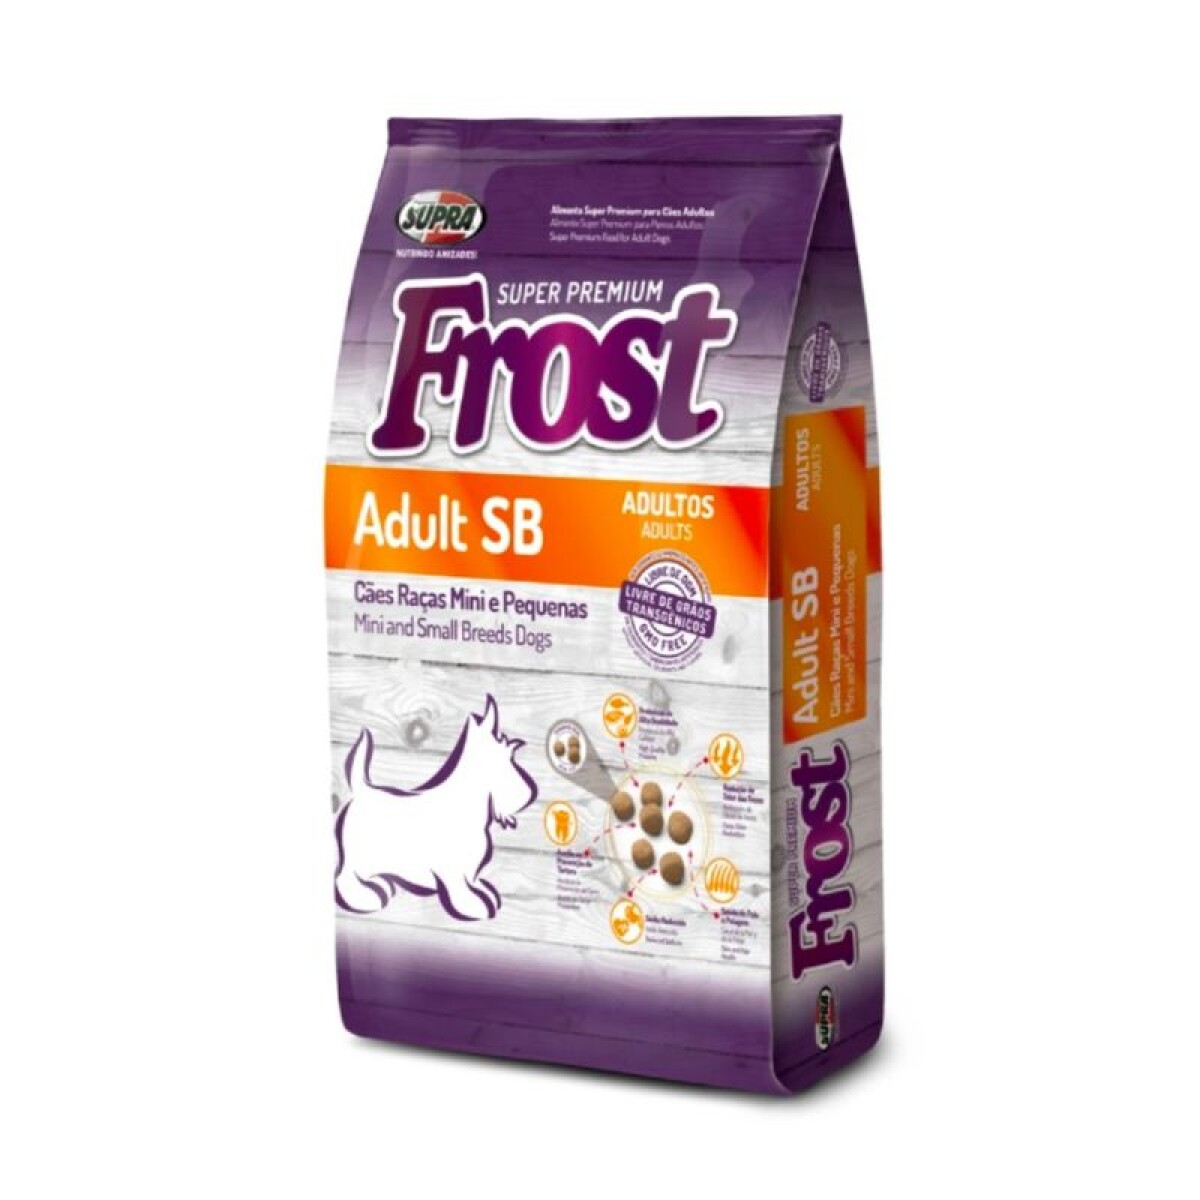 FROST ADULTO SB 15KG - Frost Adulto Sb 15kg 